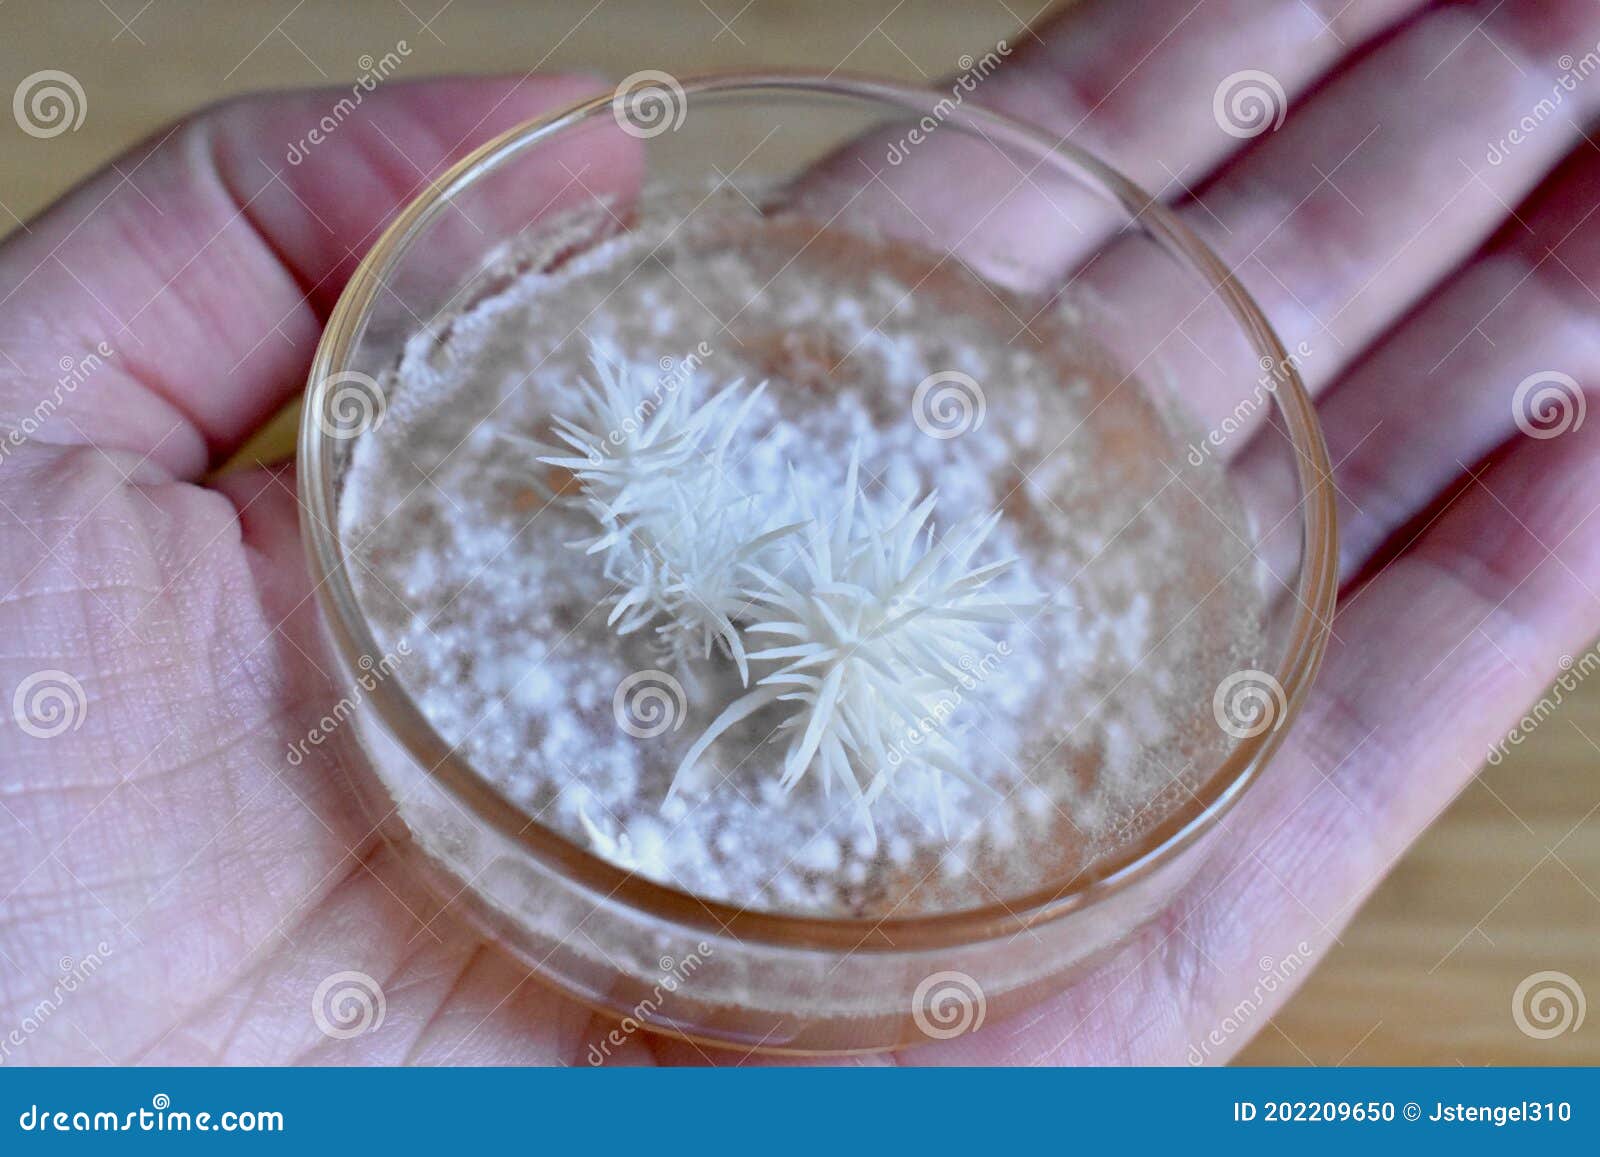 hand holding pinning white lion`s mane fungi on glass dish